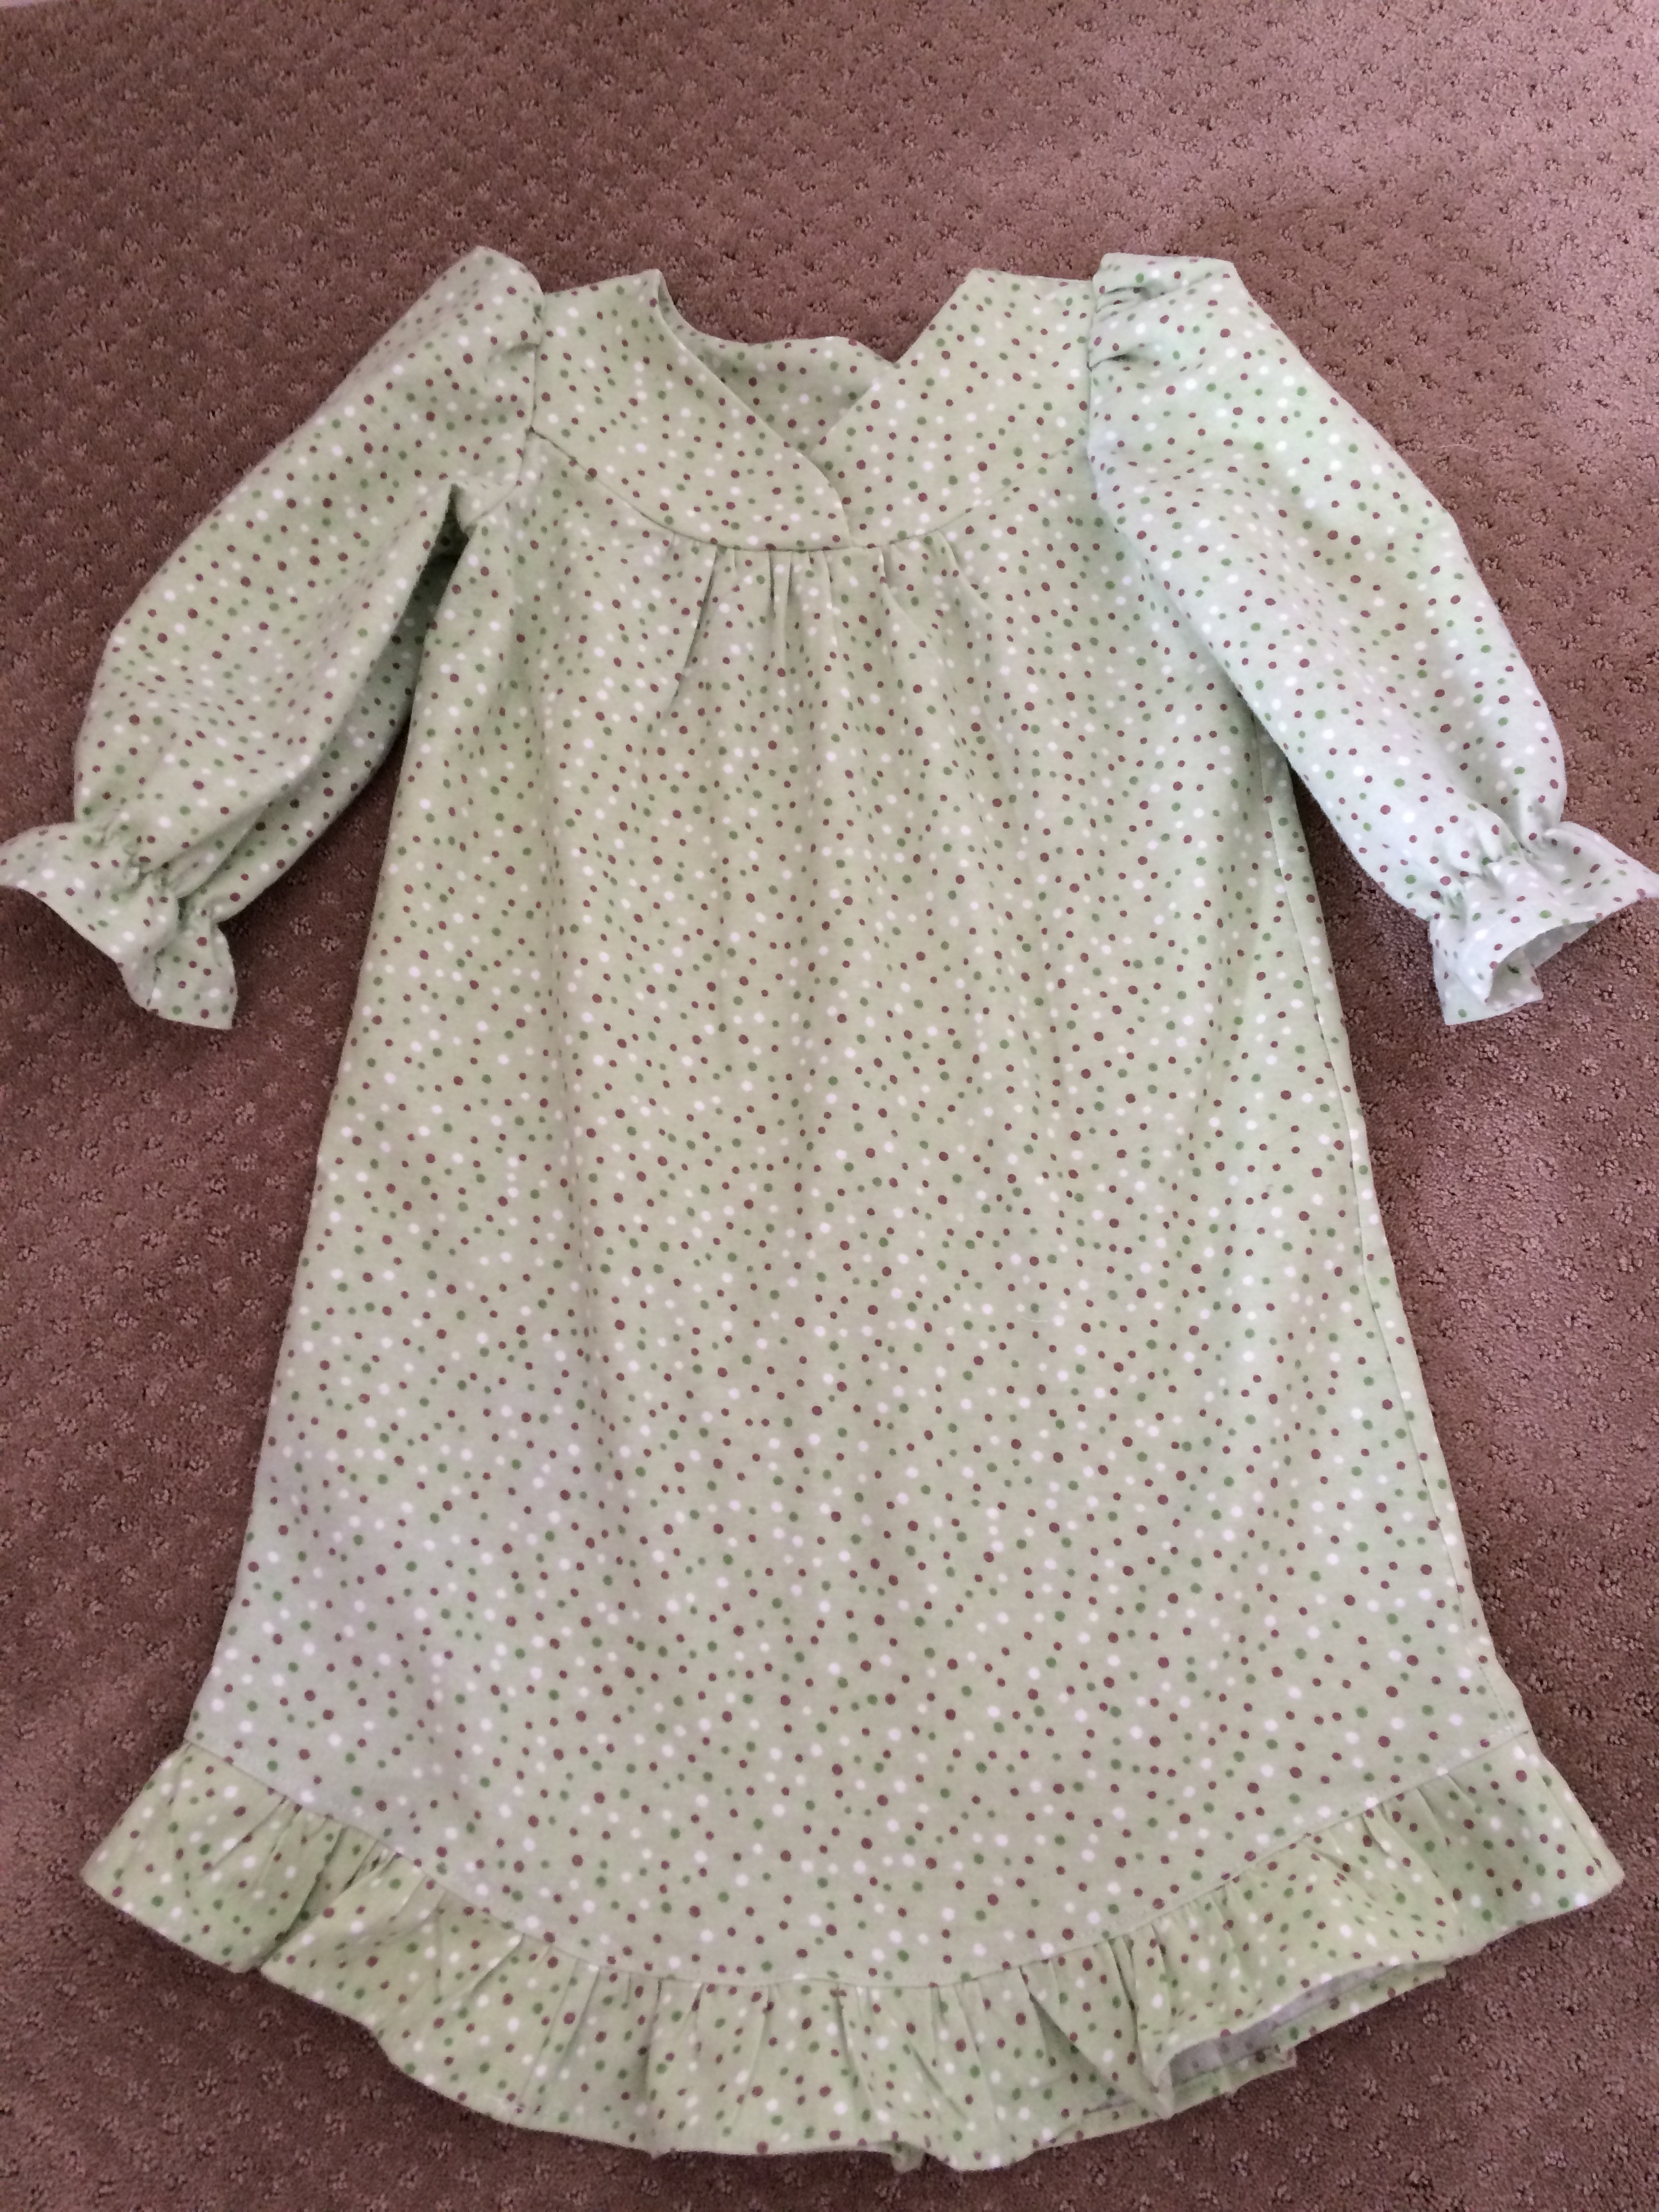 2017-03 nightgown to match xmas stocking